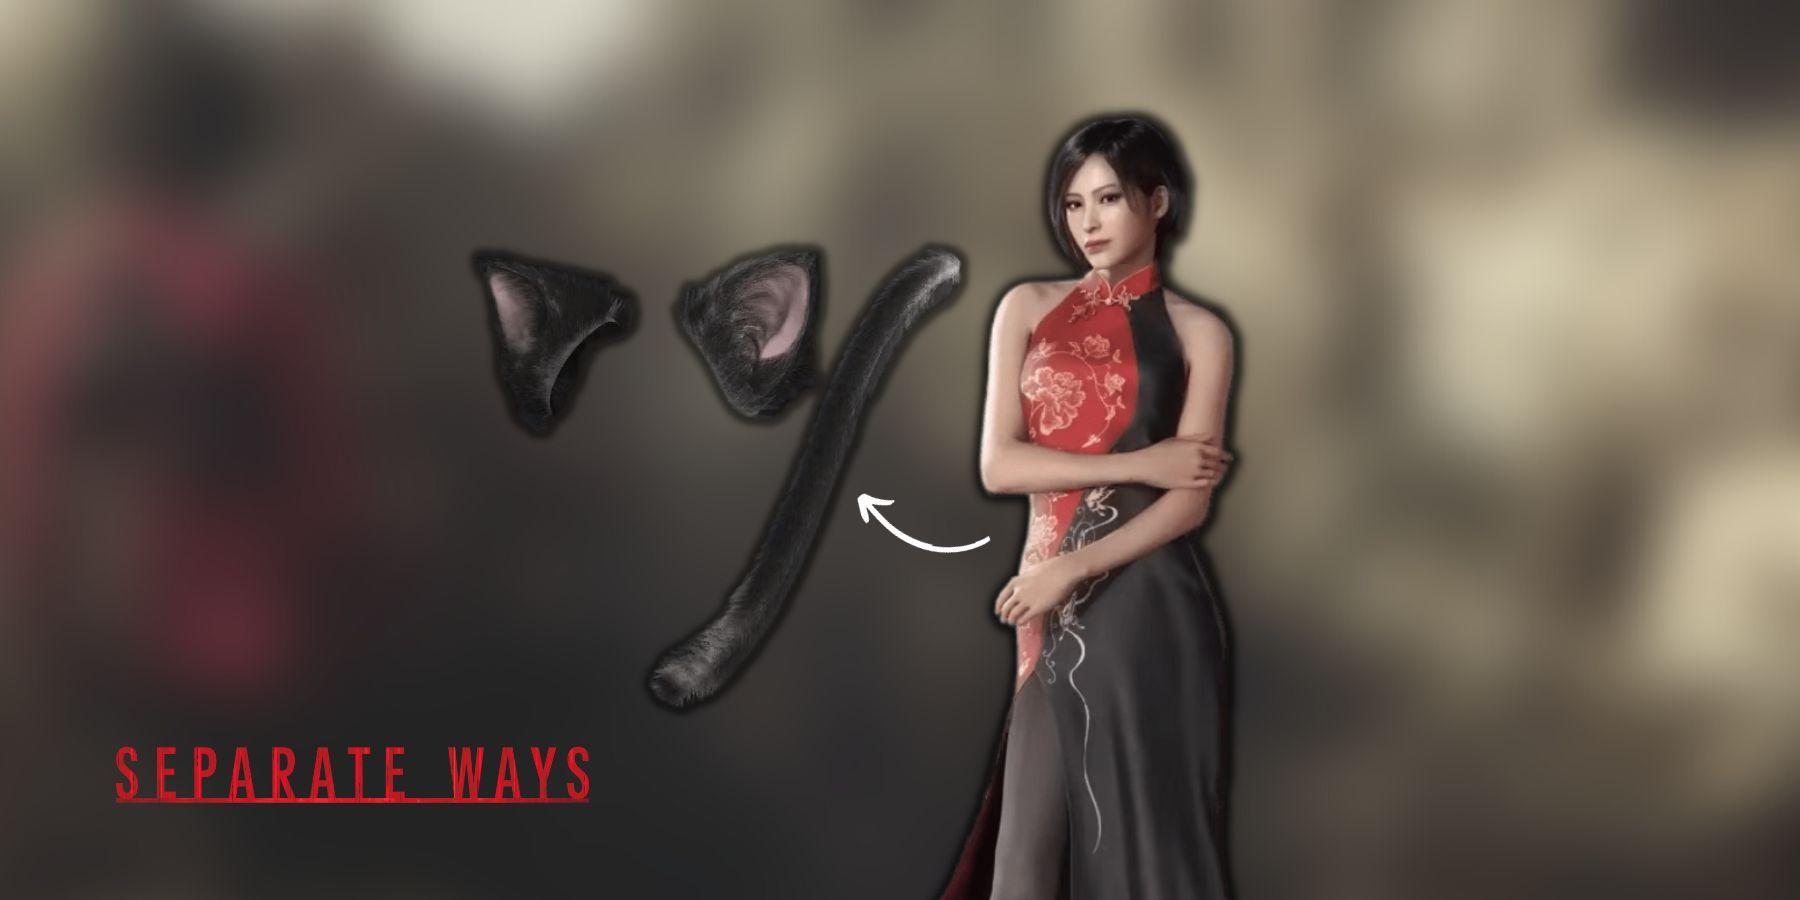 Resident Evil 4 Remake: How To Unlock Cat Ears